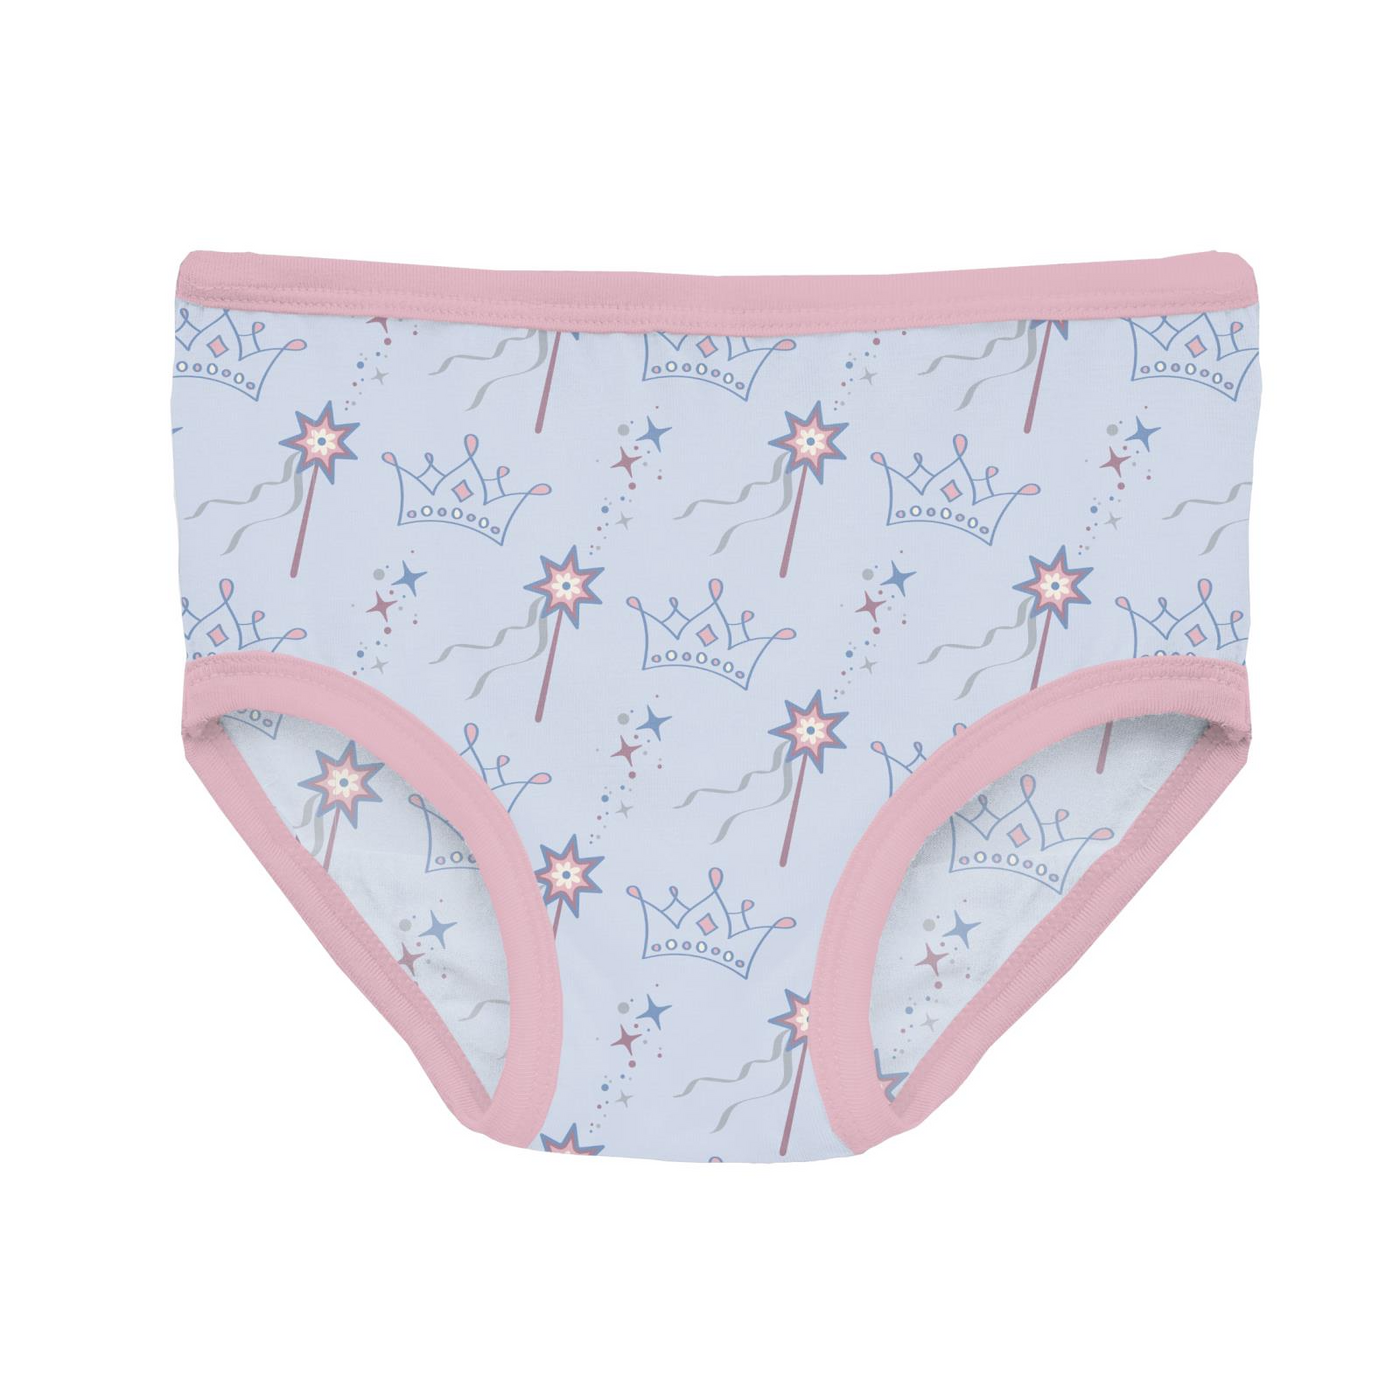 Kickee Pants Girls Underwear: Dew Magical Princess